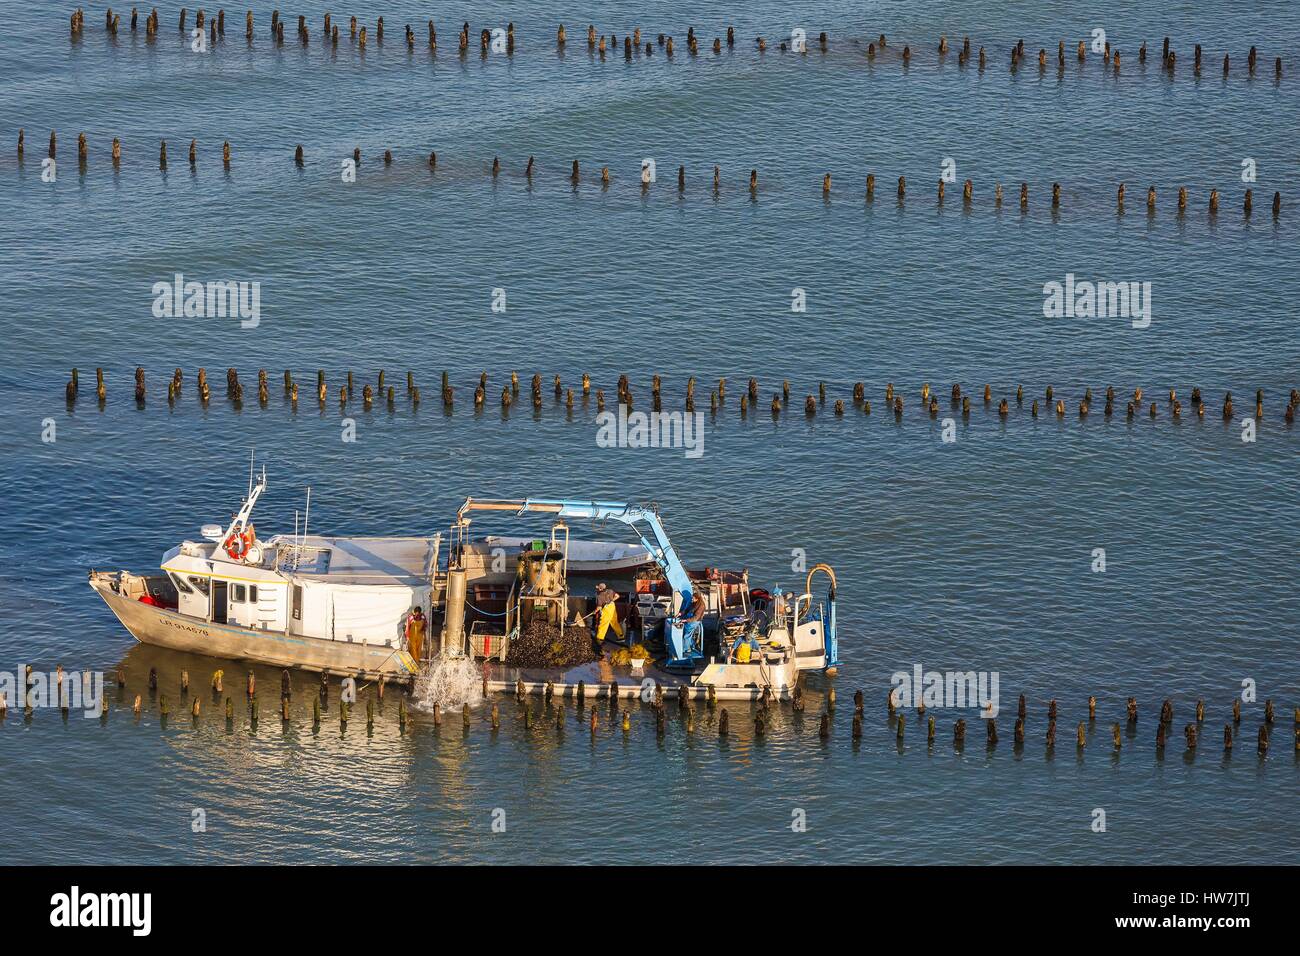 Francia, Vendée, La Faute sur Mer, barco recolectando mejillones en una granja de mejillones bouchot (vista aérea) Foto de stock